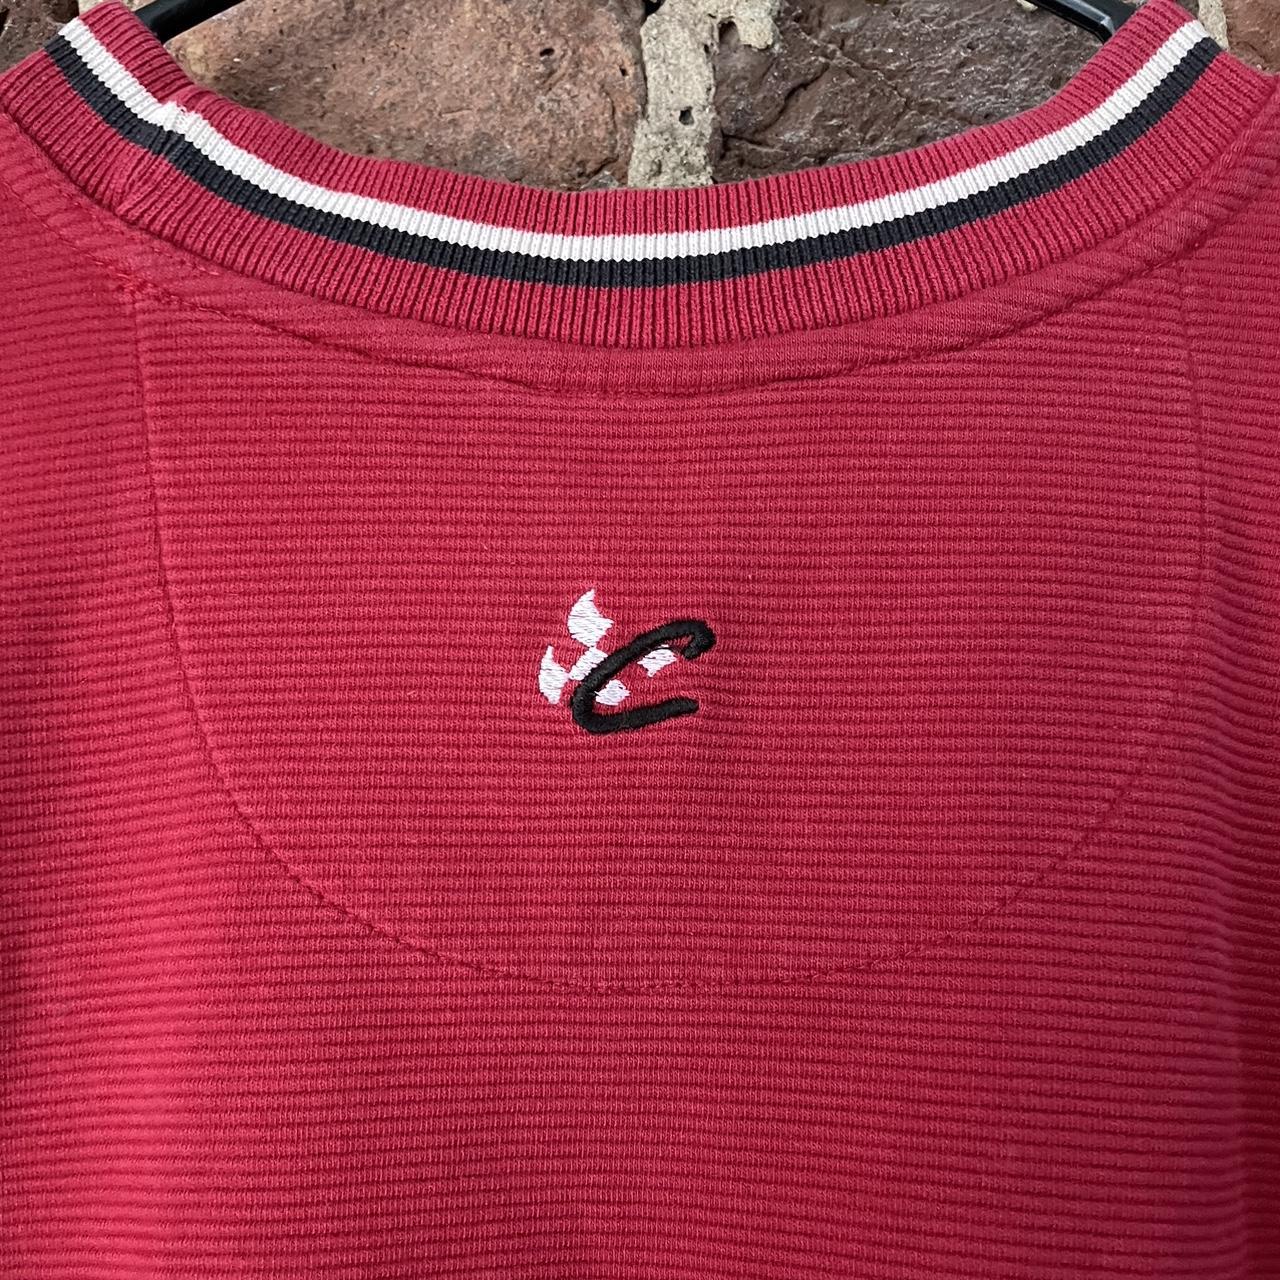 Chase Authentics Men's Red and White Sweatshirt (4)